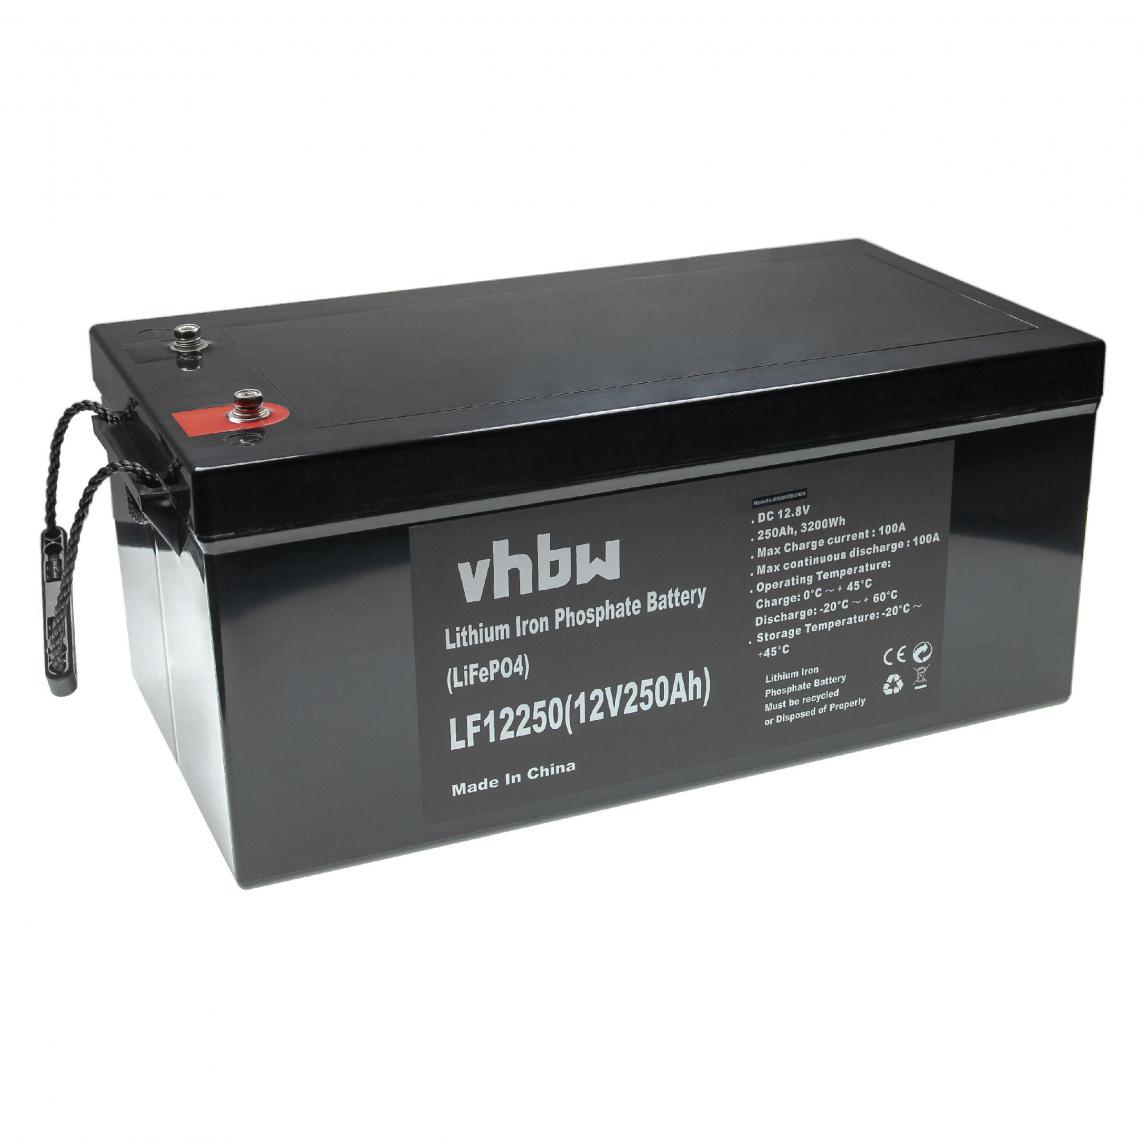 Vhbw - vhbw Batterie de bord pour caravane, bateau, camping, camping-car (250Ah, 12,8V, LiFePO4) - Autre appareil de mesure